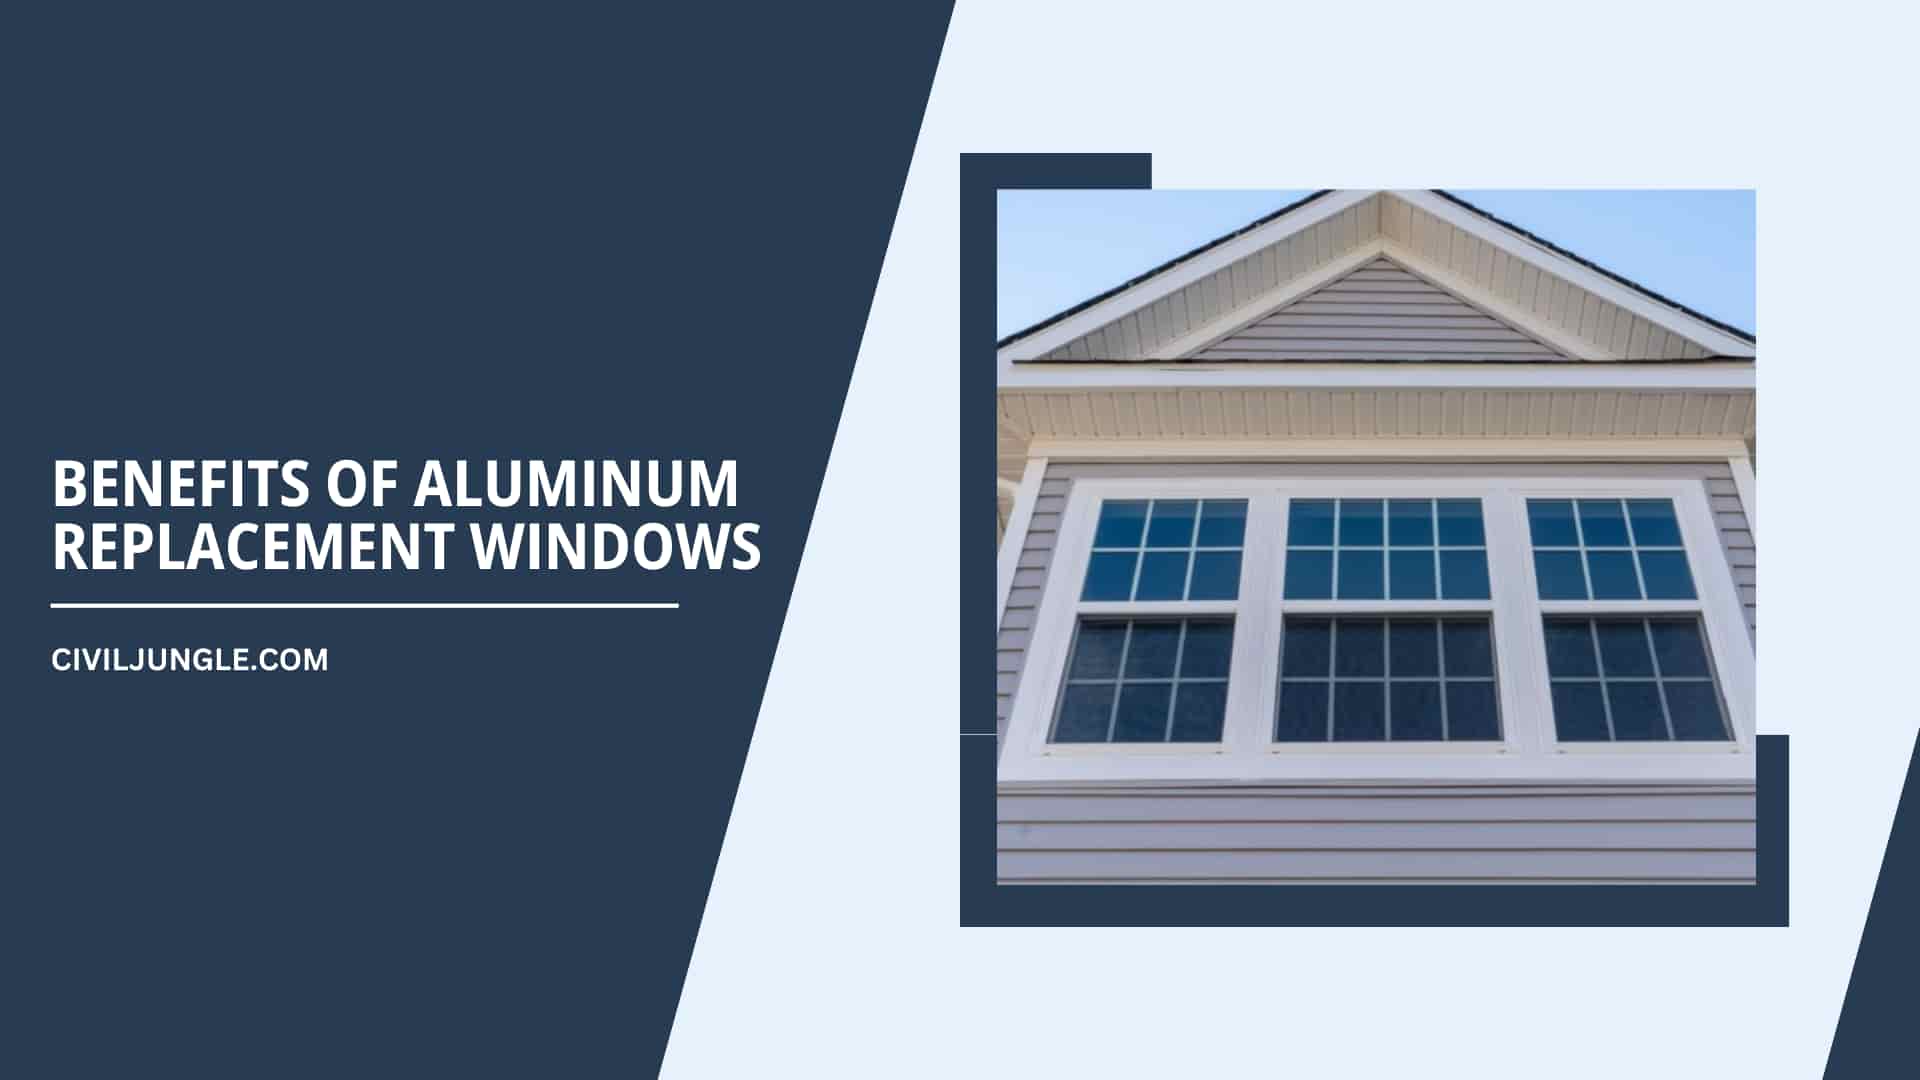 Benefits of Aluminum Replacement Windows